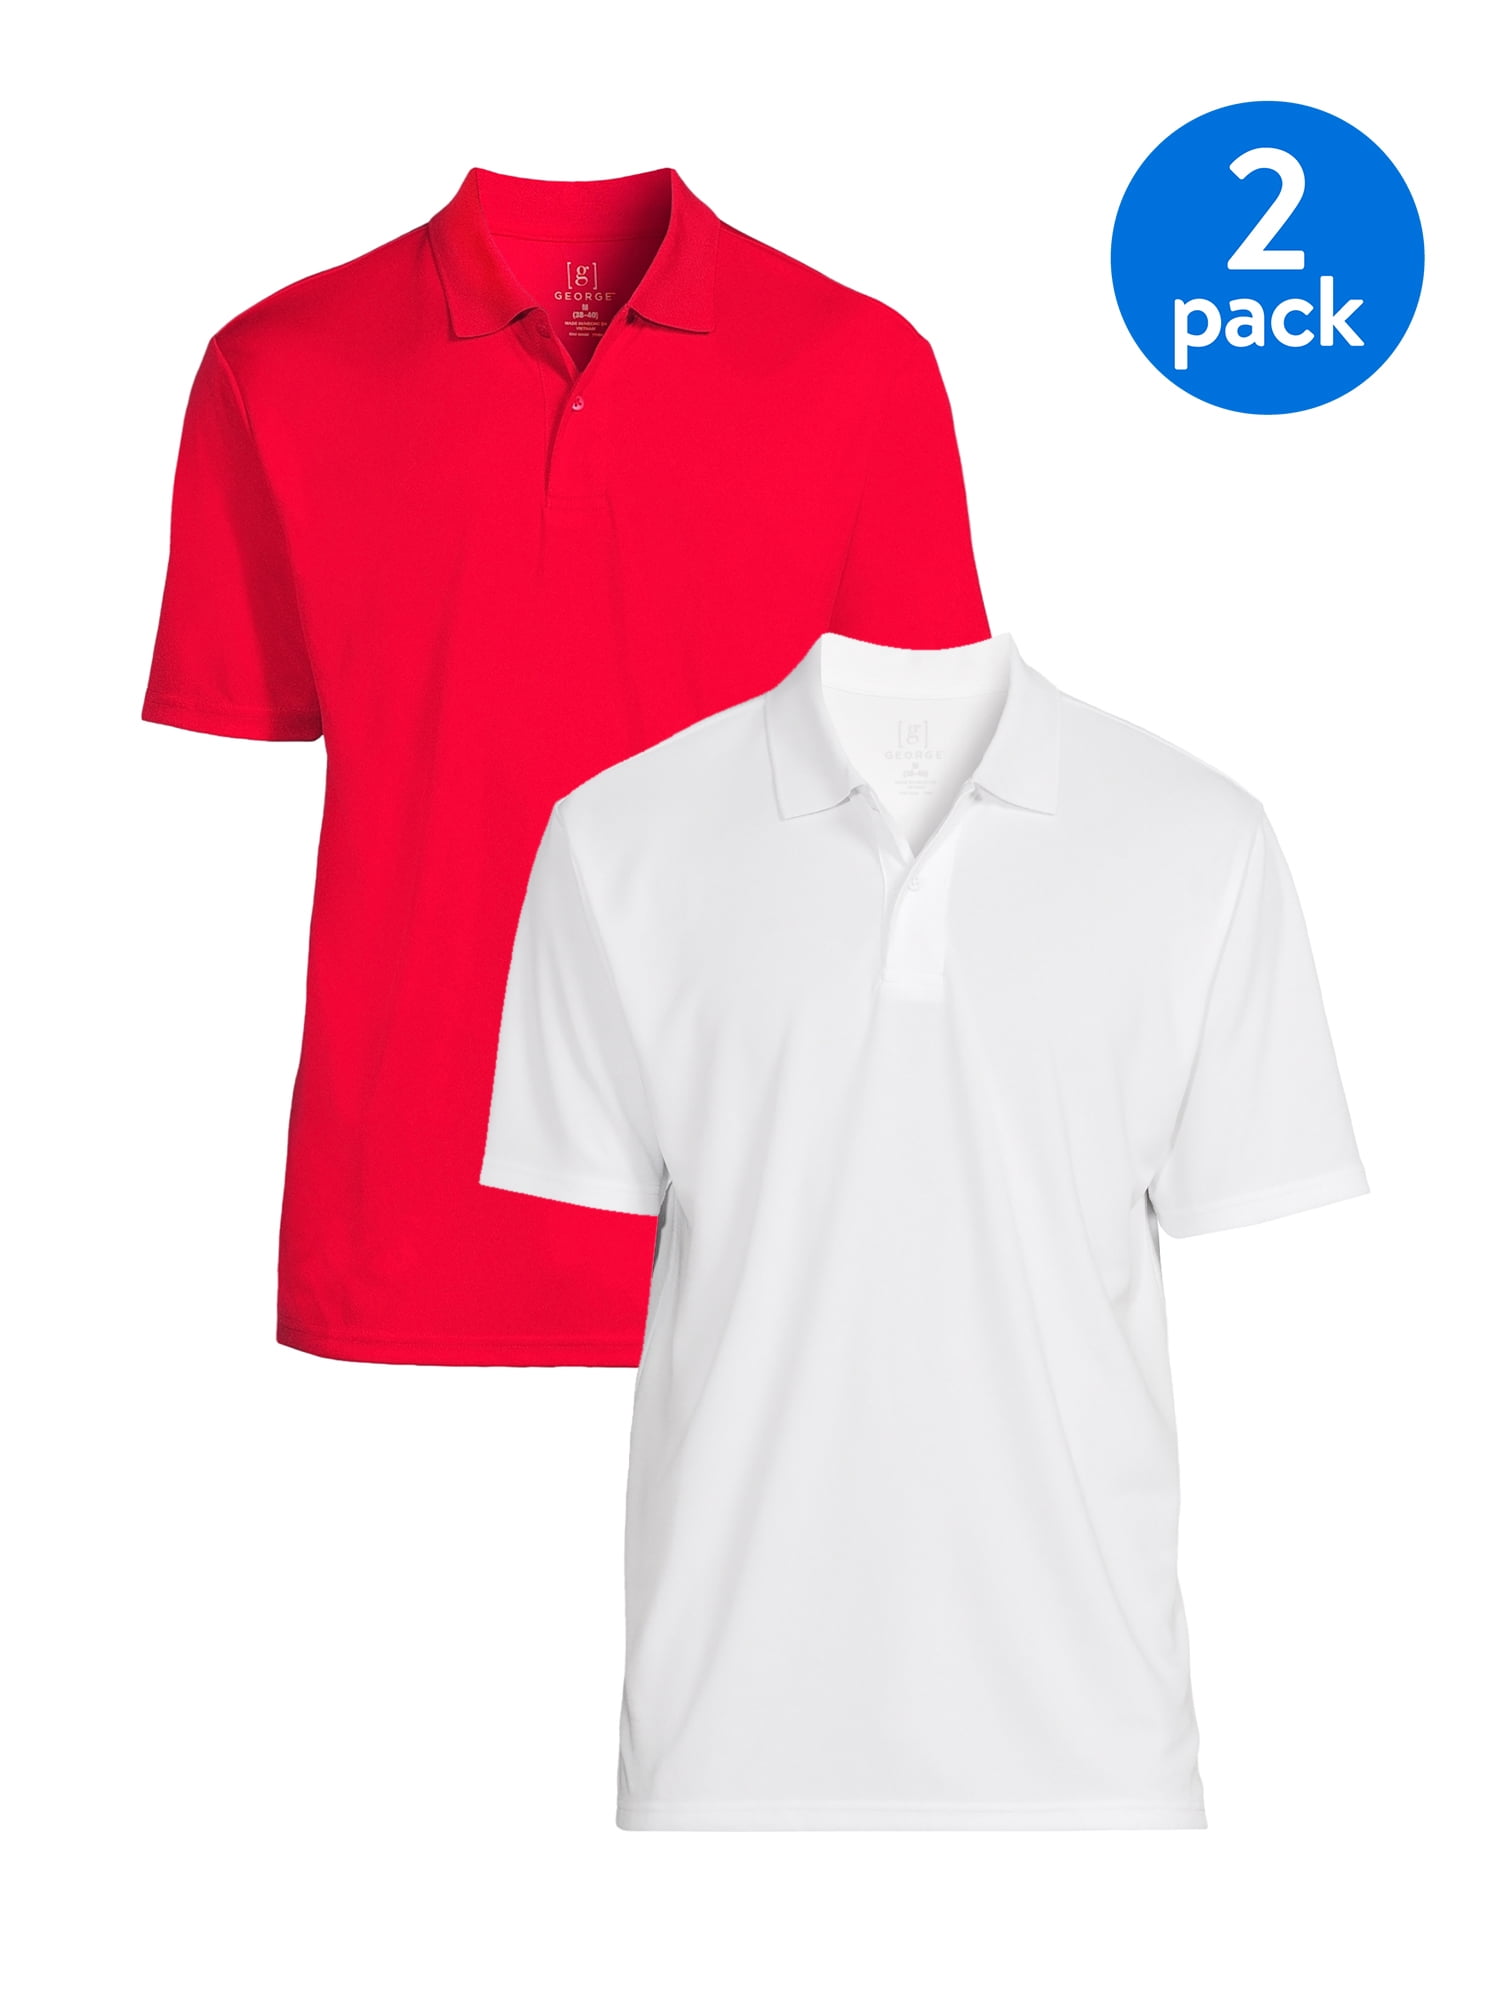 Boys' Short Sleeve Polo Shirt Kids Performance Moisture Wicking Shirt Classic Polo Embroidery Logo Boys Clothes 